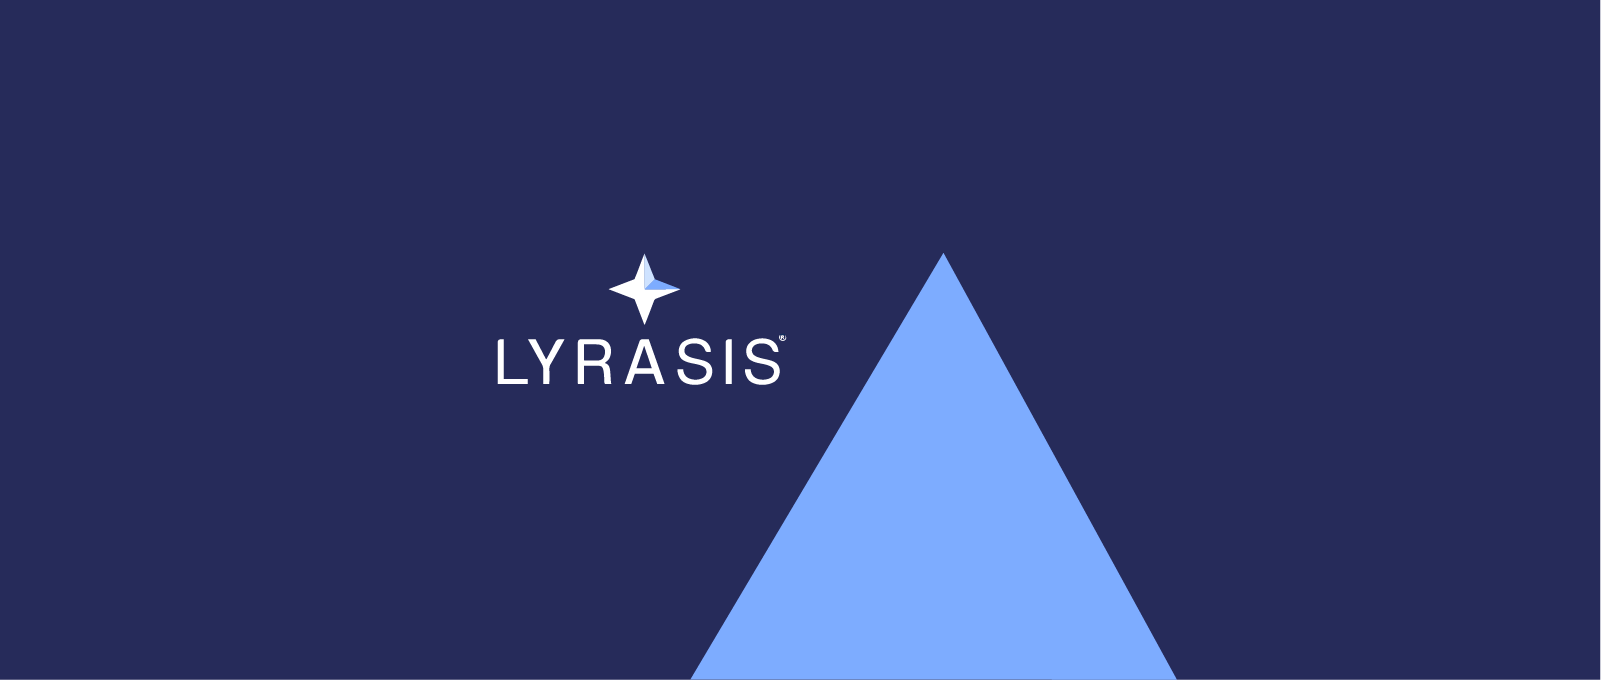 LYRASIS Case Study